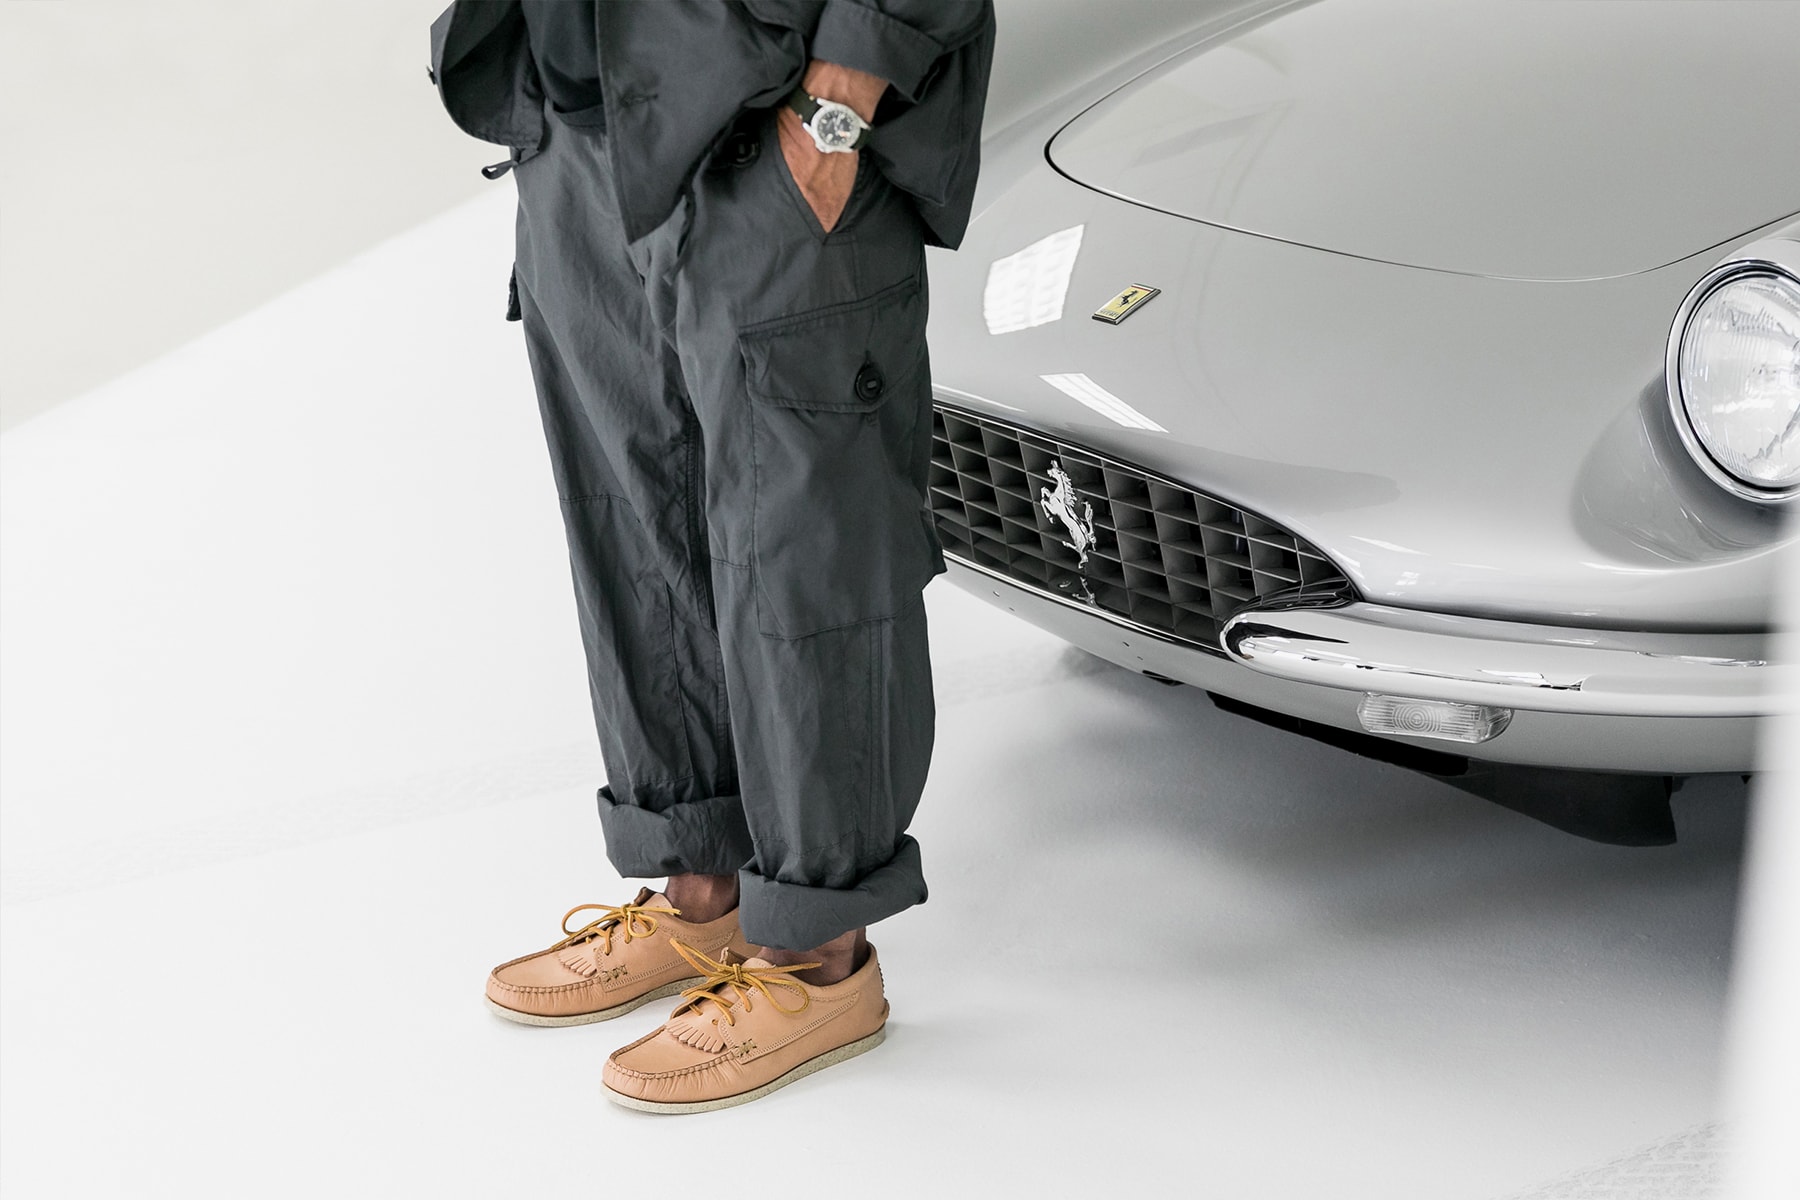 Period Correct yuketen collaboration driving shoes yuki matsuda leather beige kiltie california lookbook Ferrari 330 GT 2 2 footwear exclusive drop release date